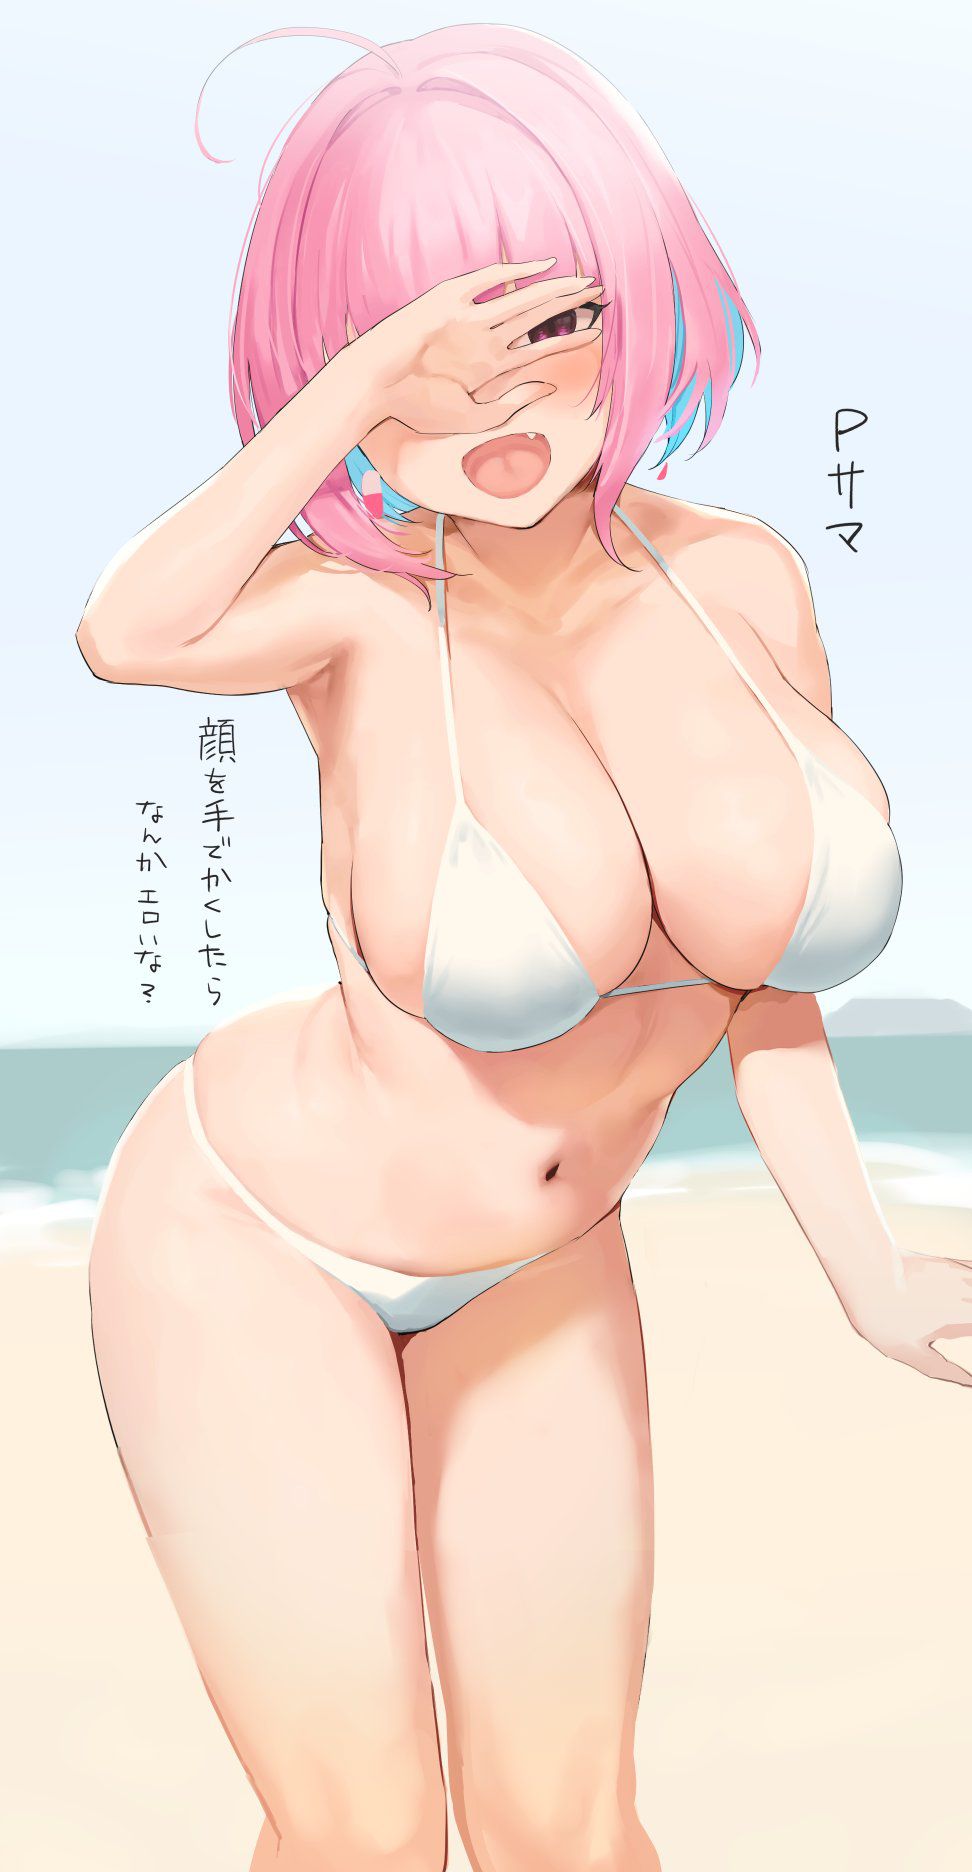 【2nd】Imus's Dream Amu-chan's Cute Erotic Image Part 3 6